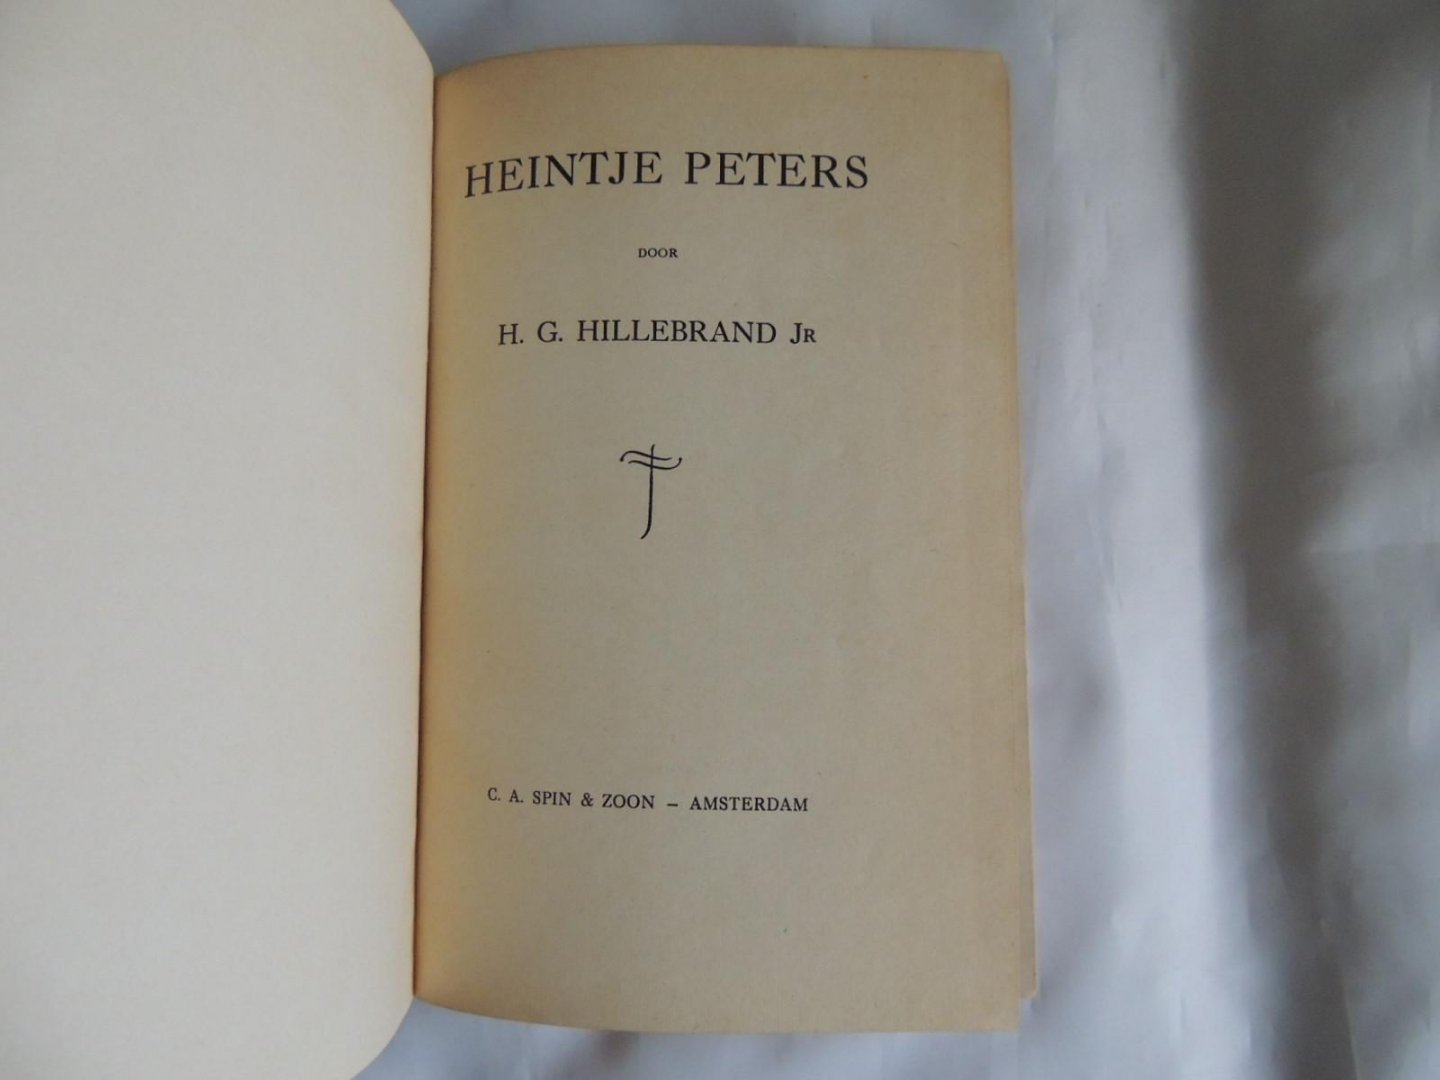 Hillebrand Jr, H.G. - Heintje Peters